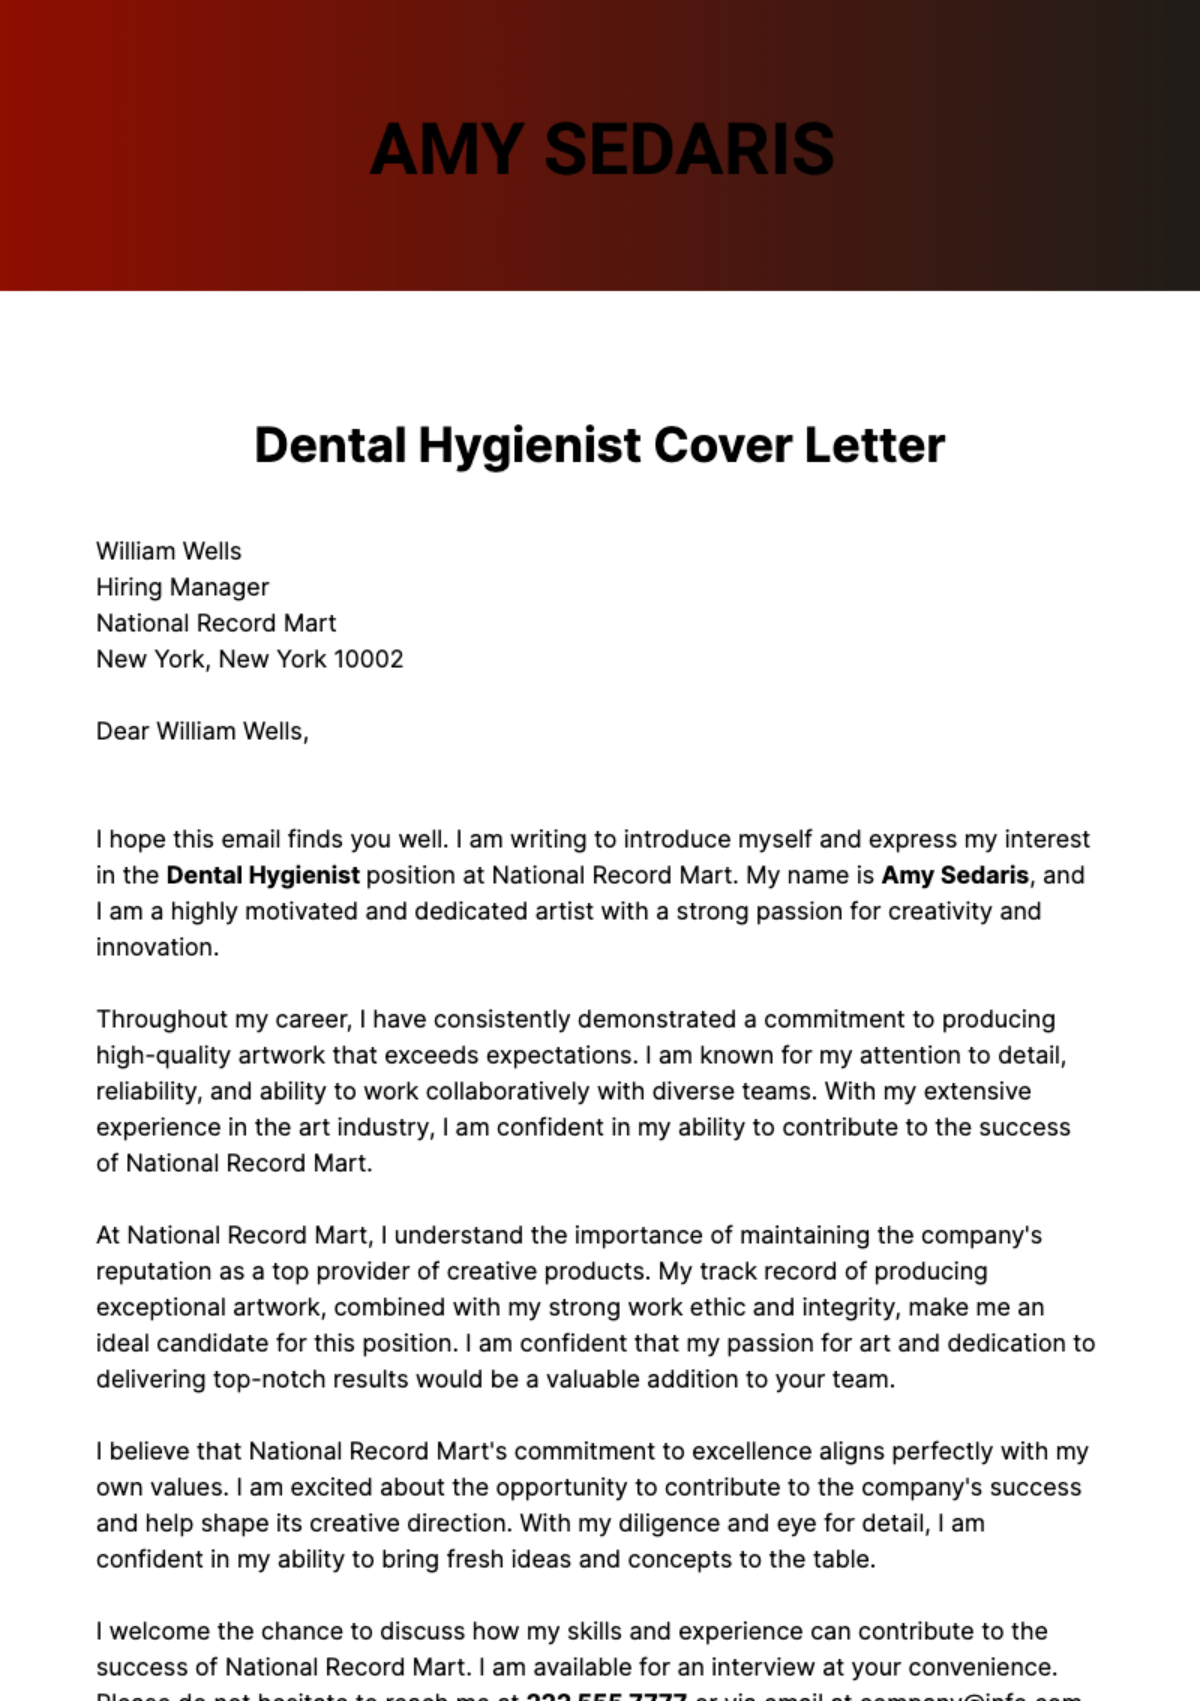 Dental Hygienist Cover Letter  Template